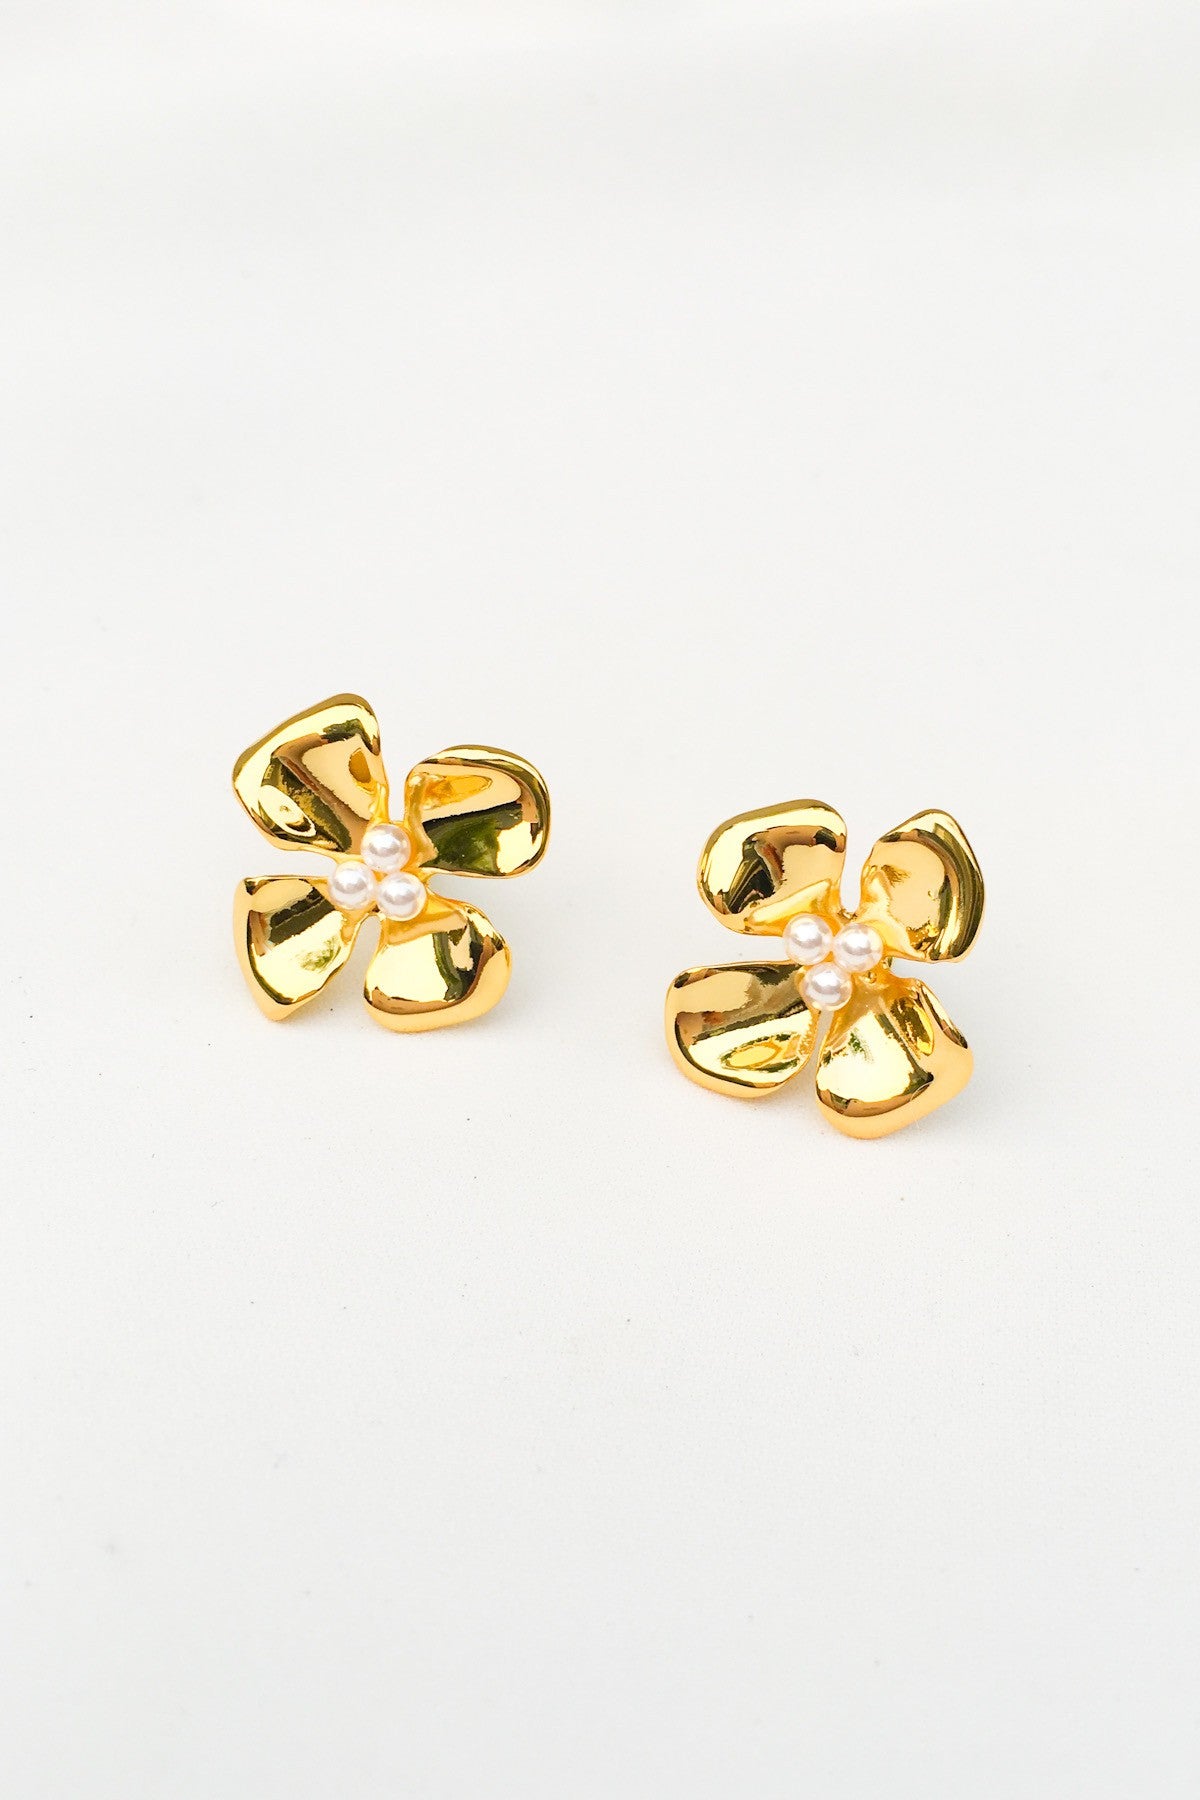 SKYE San Francisco SF California shop ethical sustainable modern chic designer women jewelry Cateline 18K Gold Pearl Earrings 3